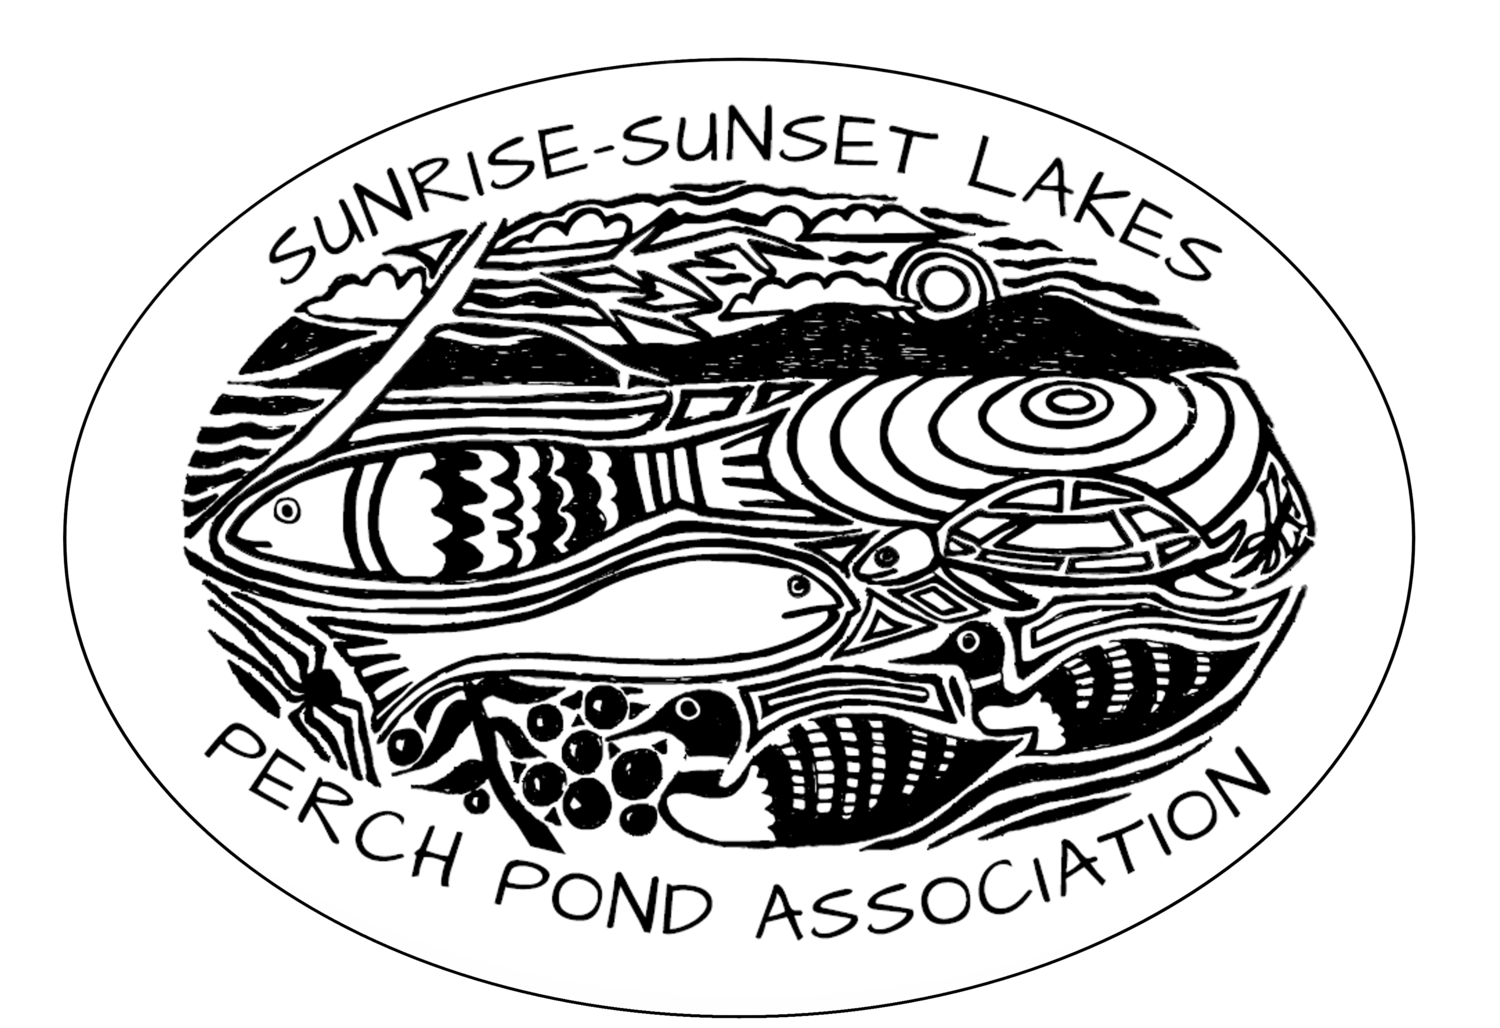 Sunset-Sunrise Lake, Perch Pond Association